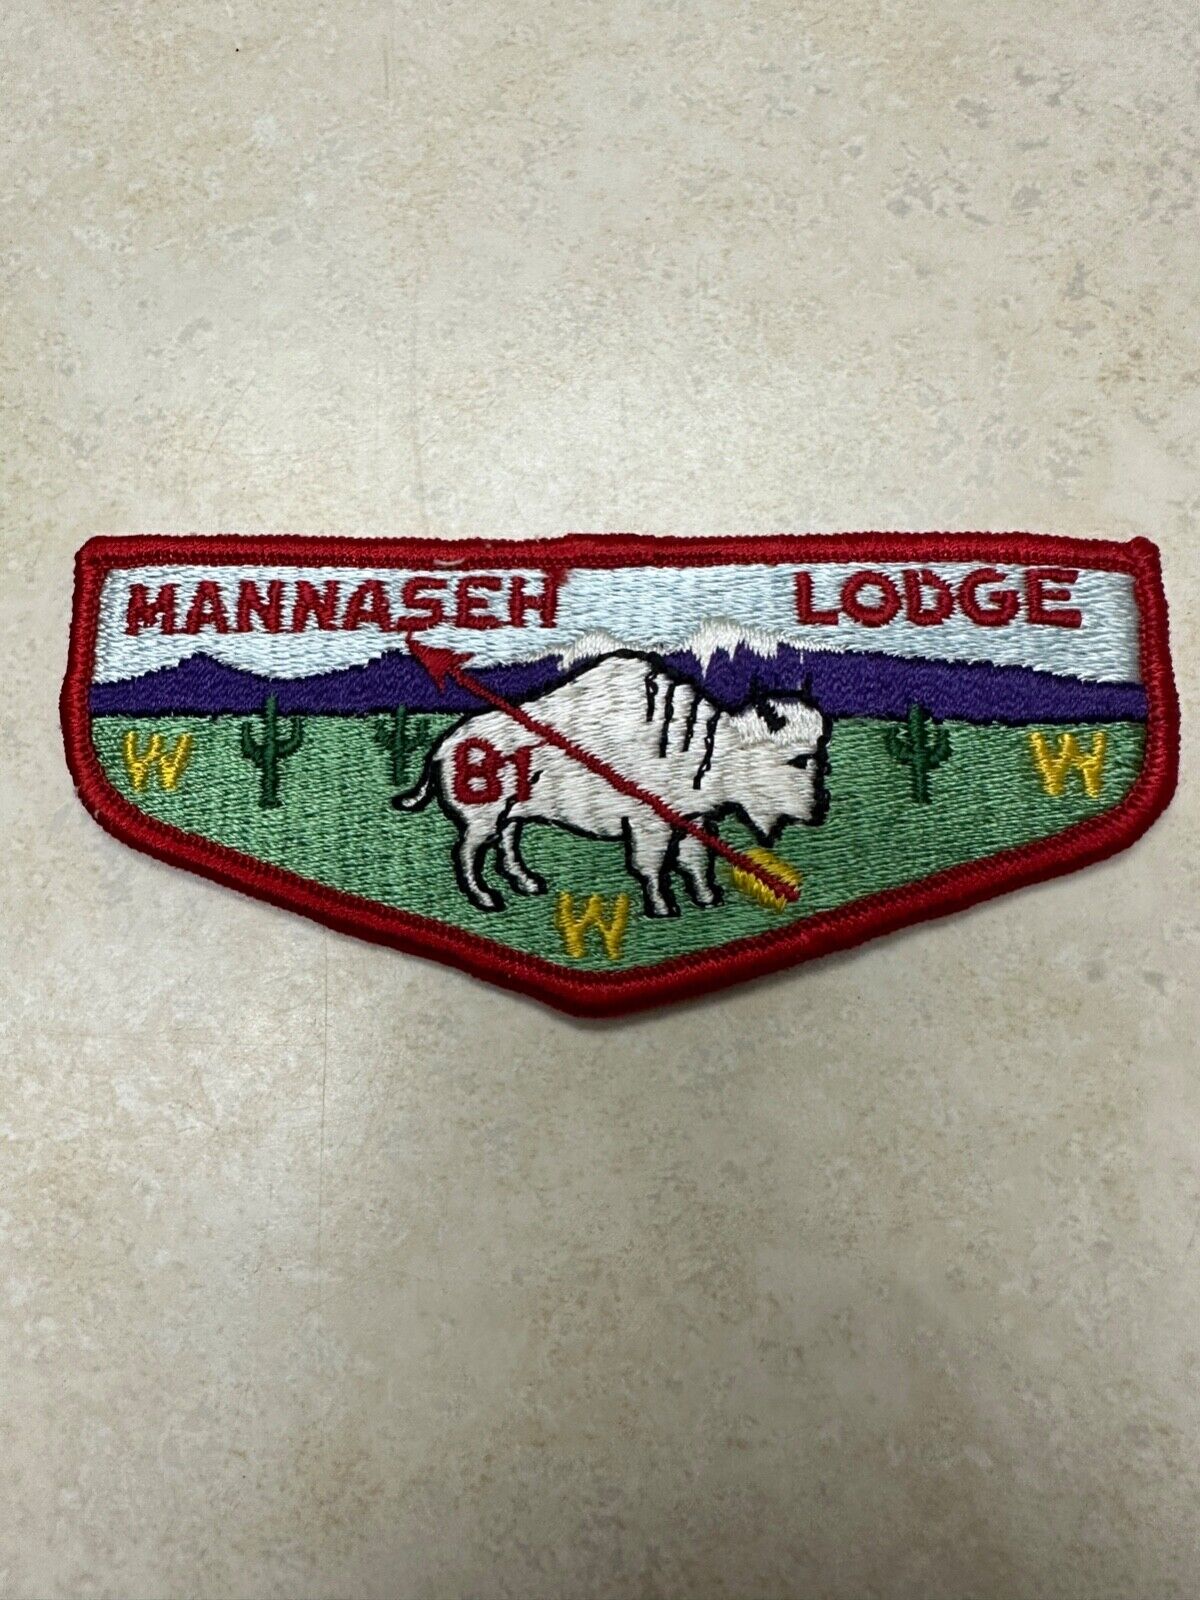 OA Lodge Mannaseh Solid Flap